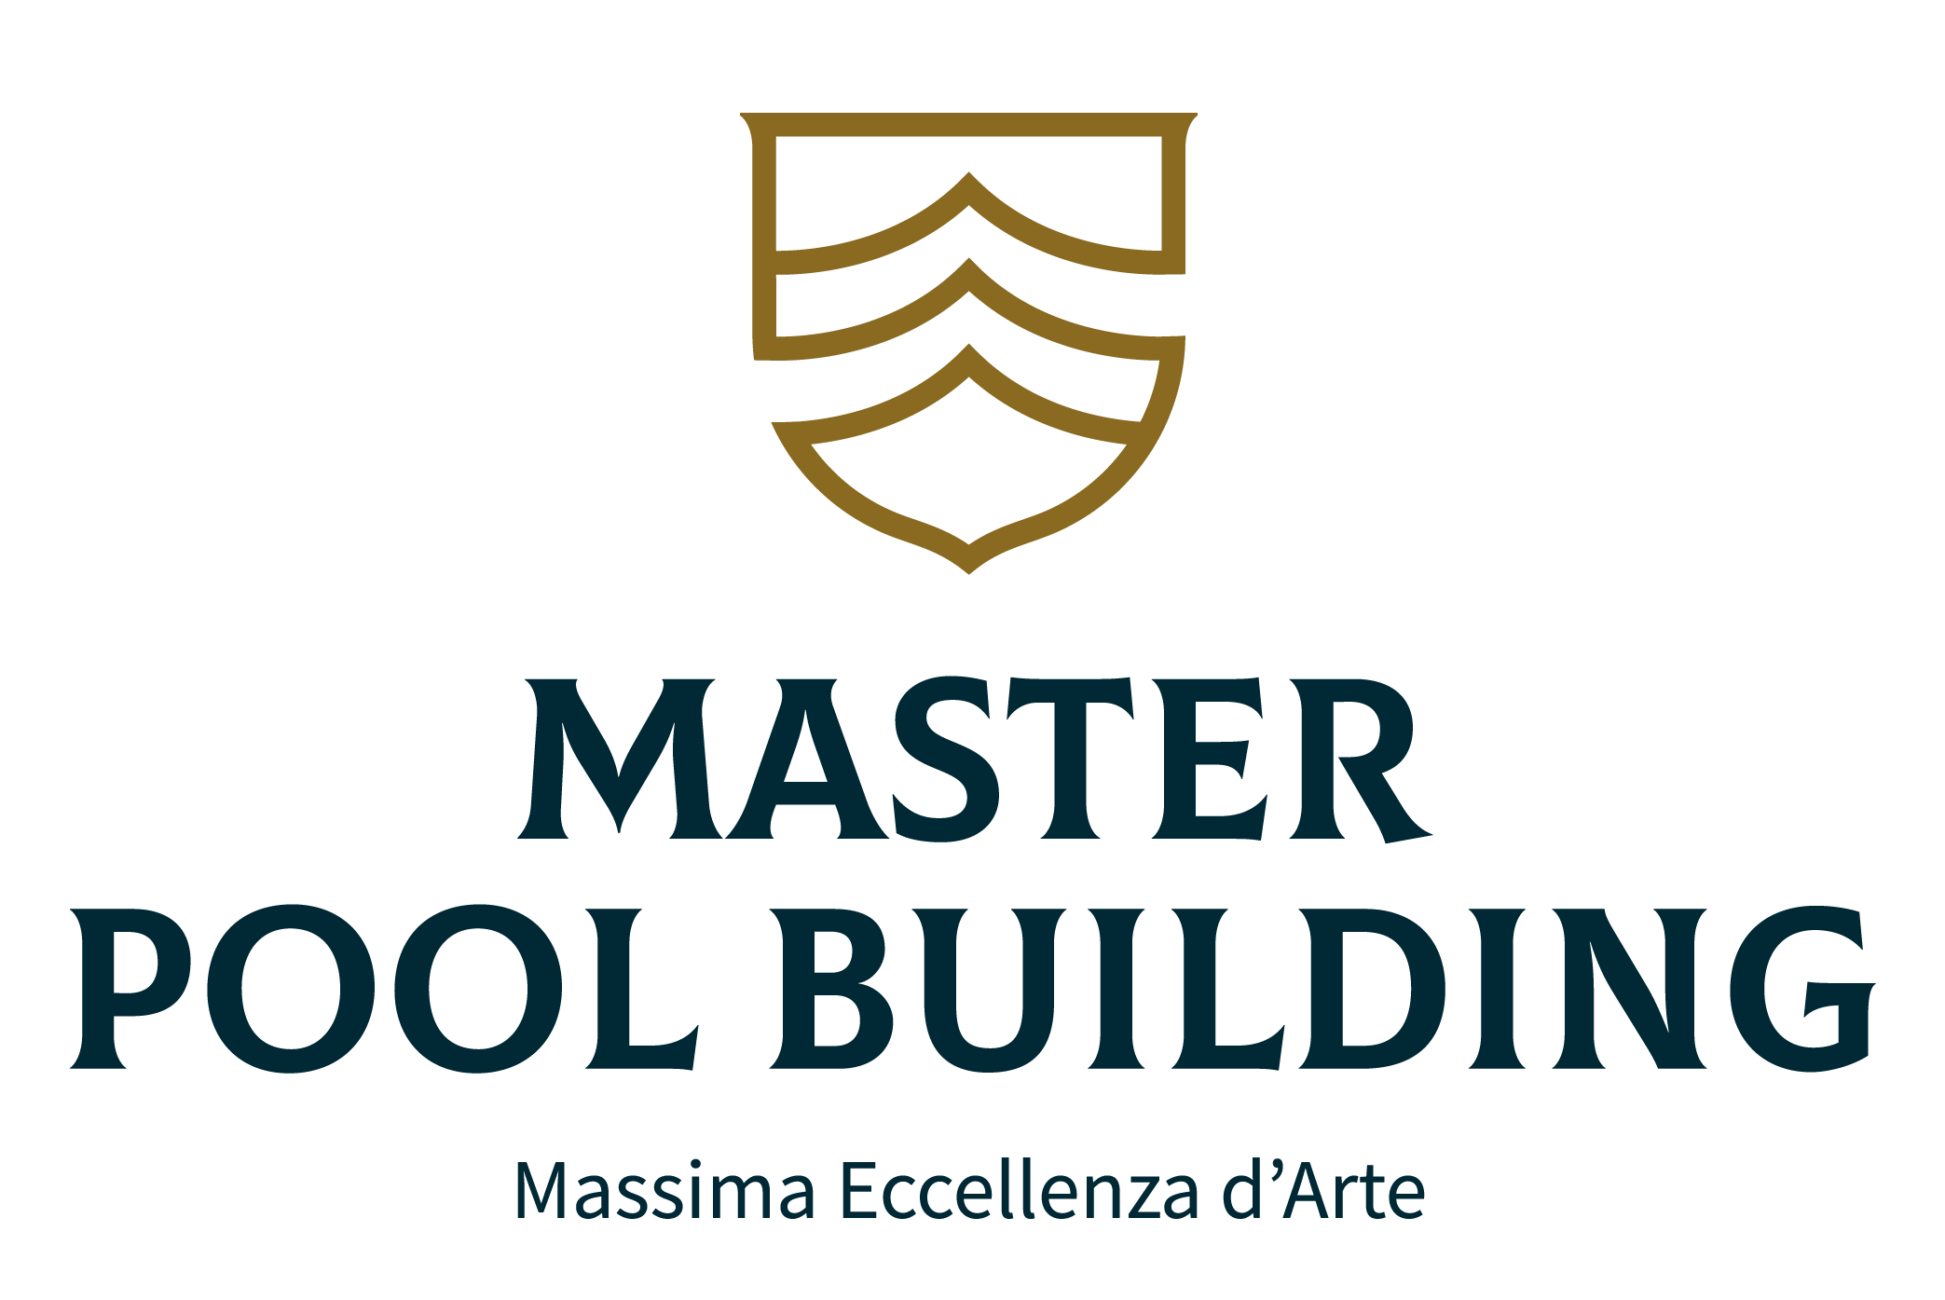 Le prime aziende qualificate Master Pool Building - MPB